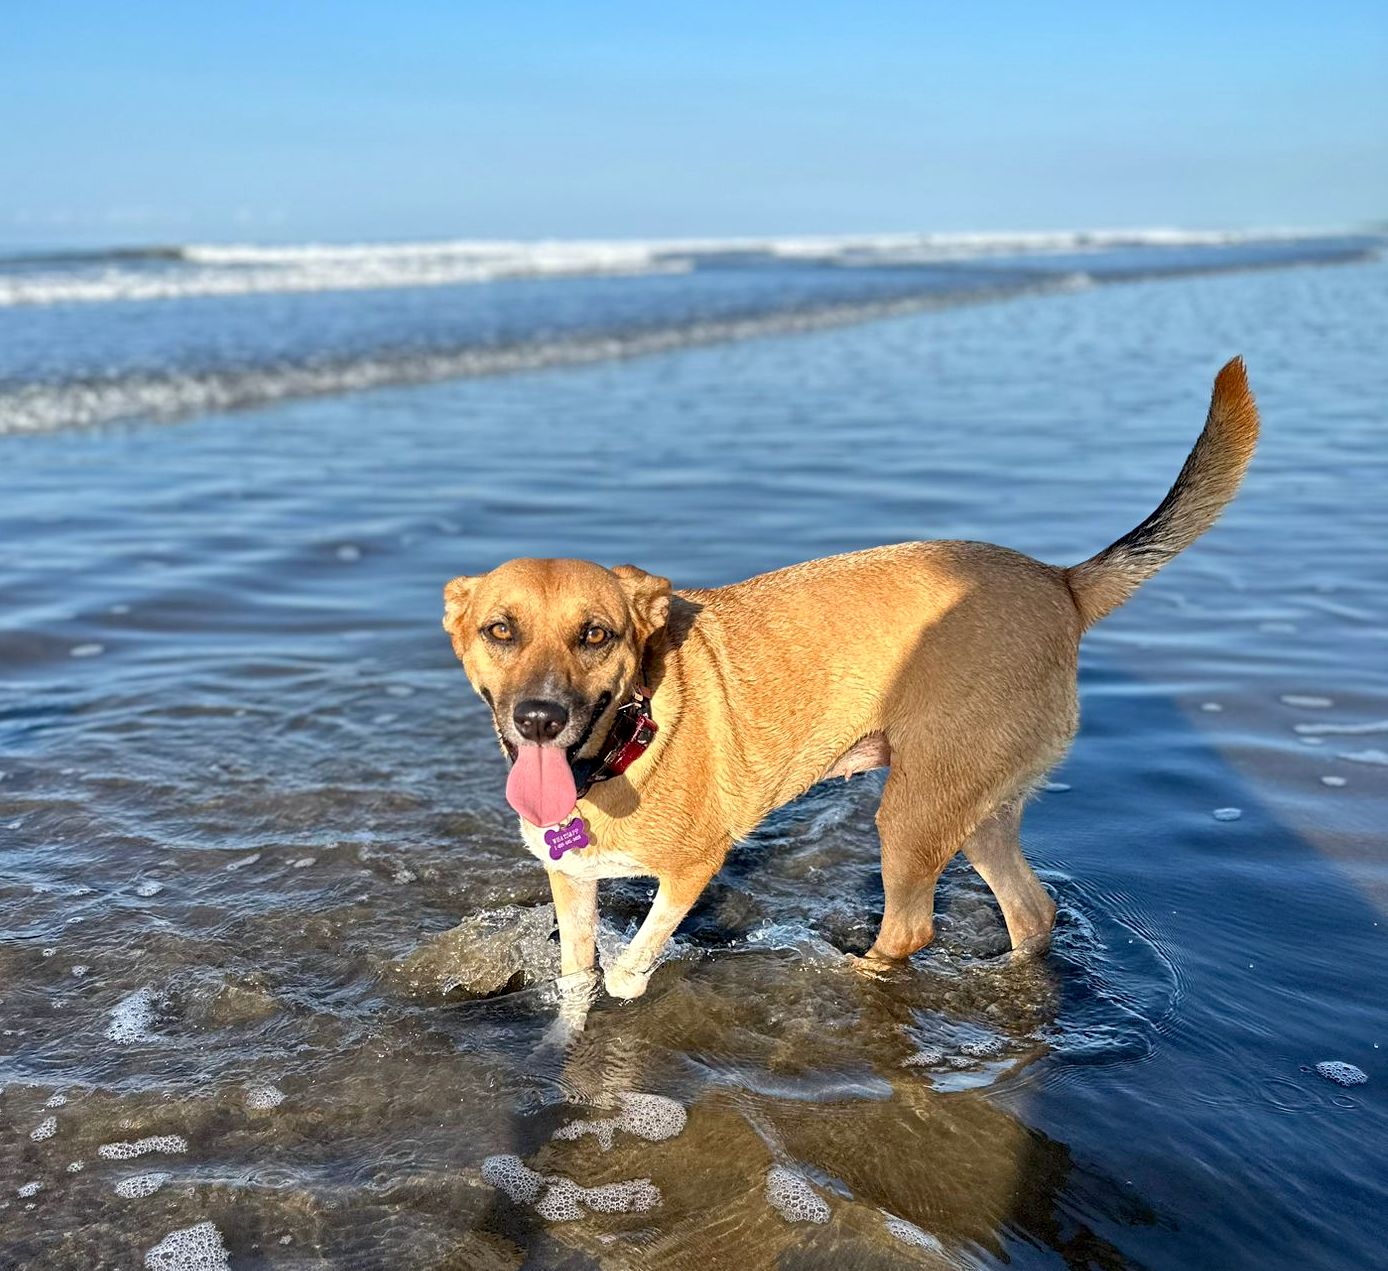 Cute tan dog playing in the ocean.